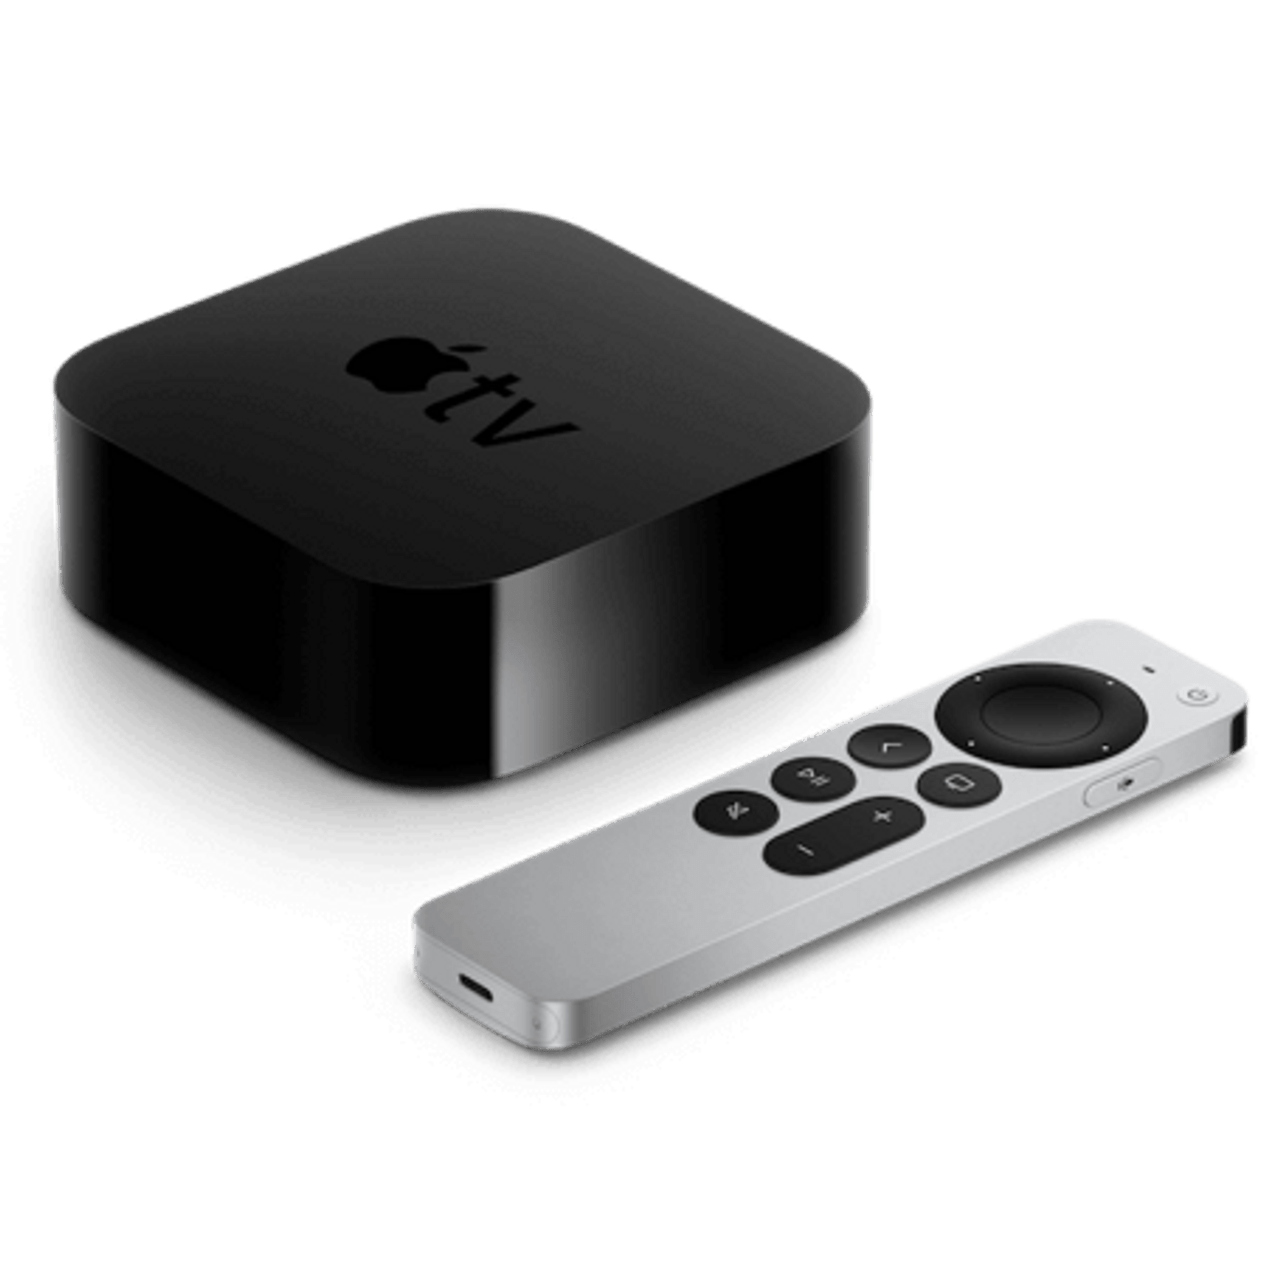 Apple TV 4K 32GB (2nd Generation) (Latest Model) - Black | MXGY2LL/A AYOUB COMPUTERS | LEBANON